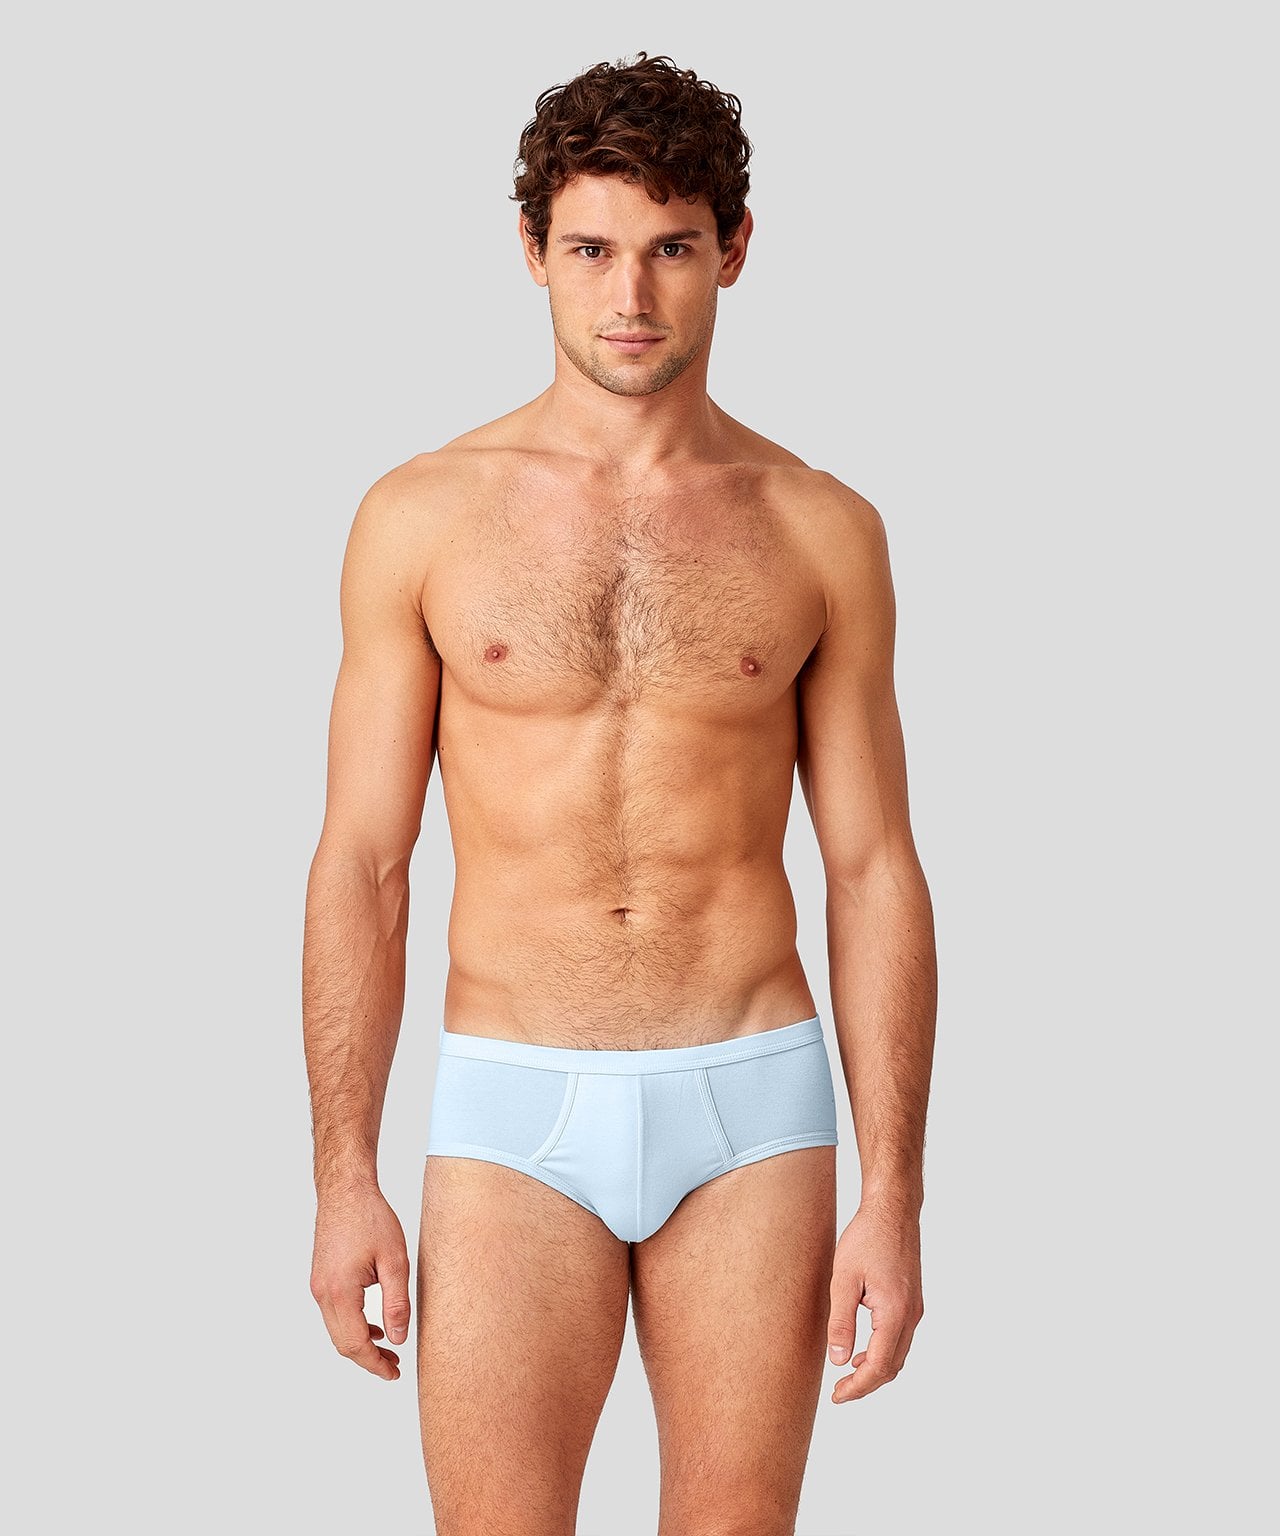 råb op Opera høj The Best Stylish Underwear to Shop For Men in 2020 | POPSUGAR Fashion